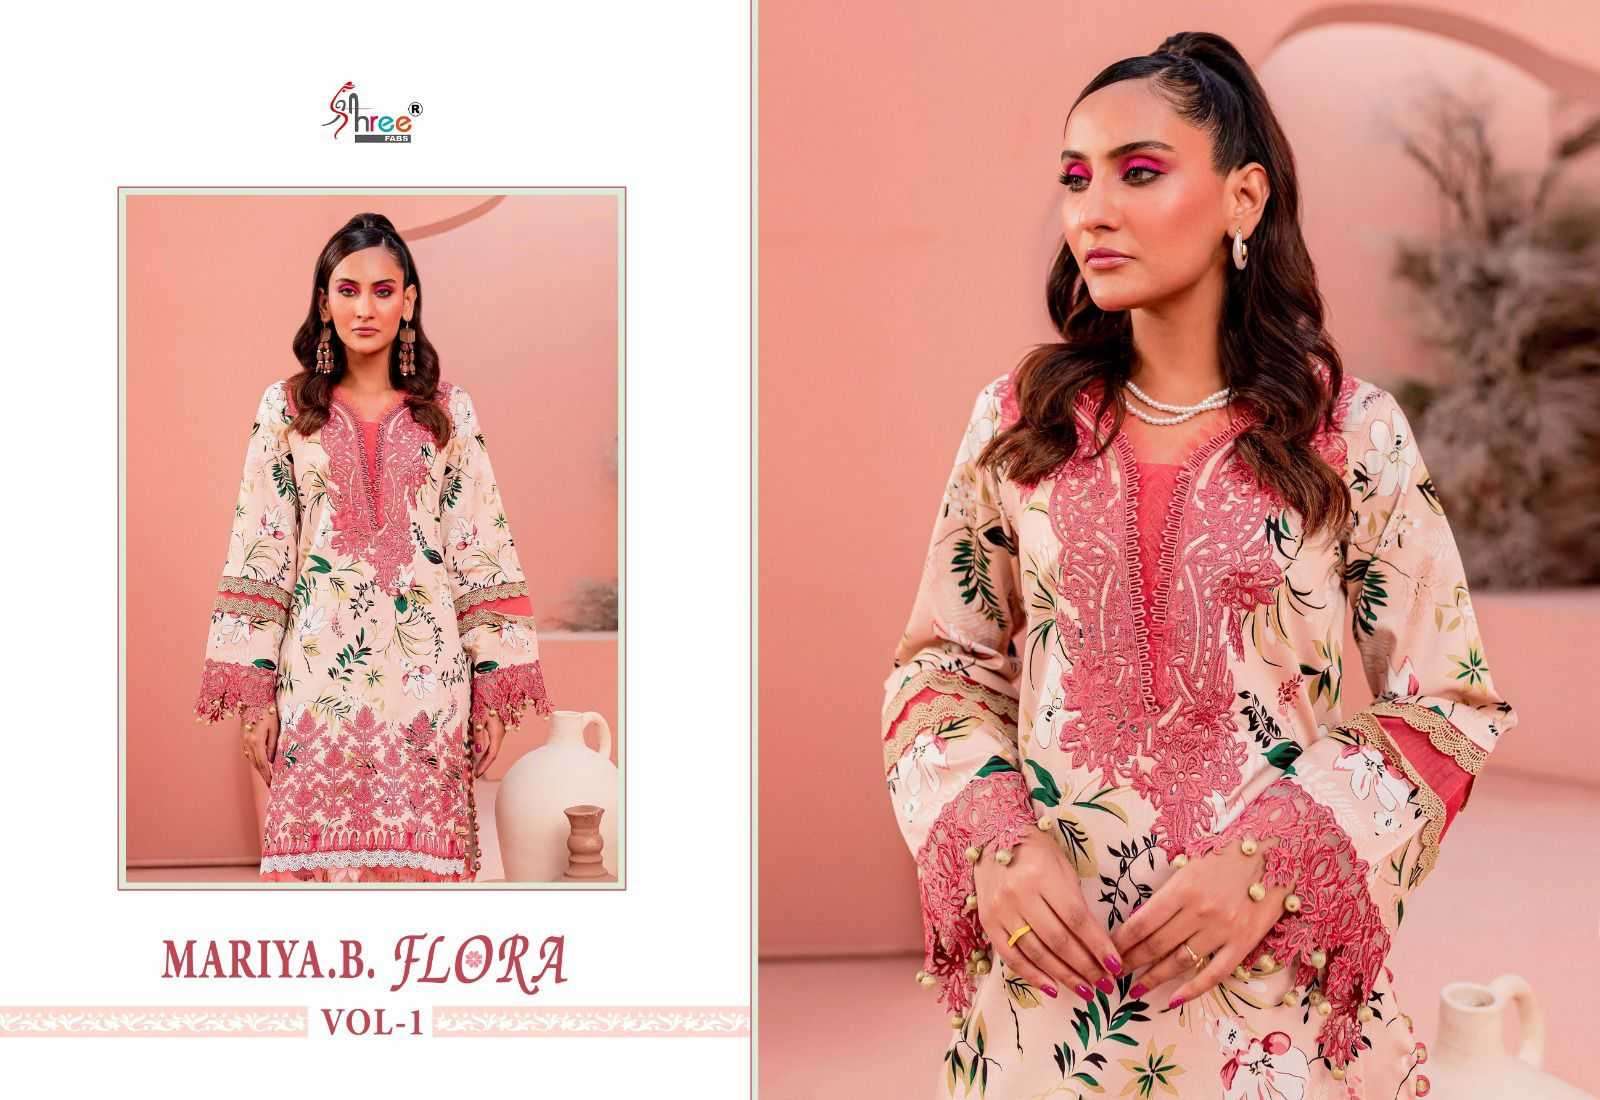 Shree fabs mariya.b. flora vol 1 jam cotton with embroidery work Cotton dupatta pakistani suits Online - jilaniwholesalesuit